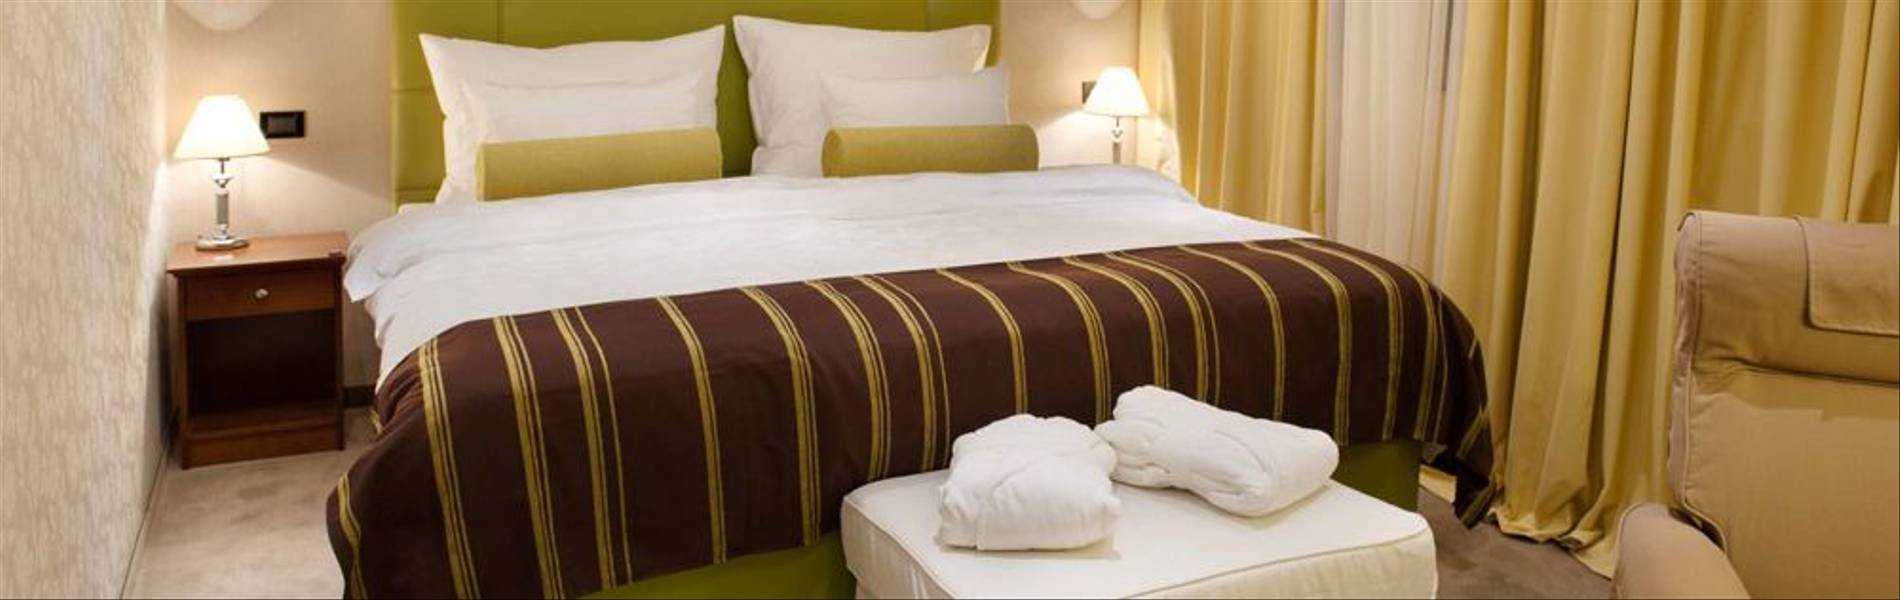 De-Luxe-double-room-Hotel-Dubrovnik-Zagreb.jpg